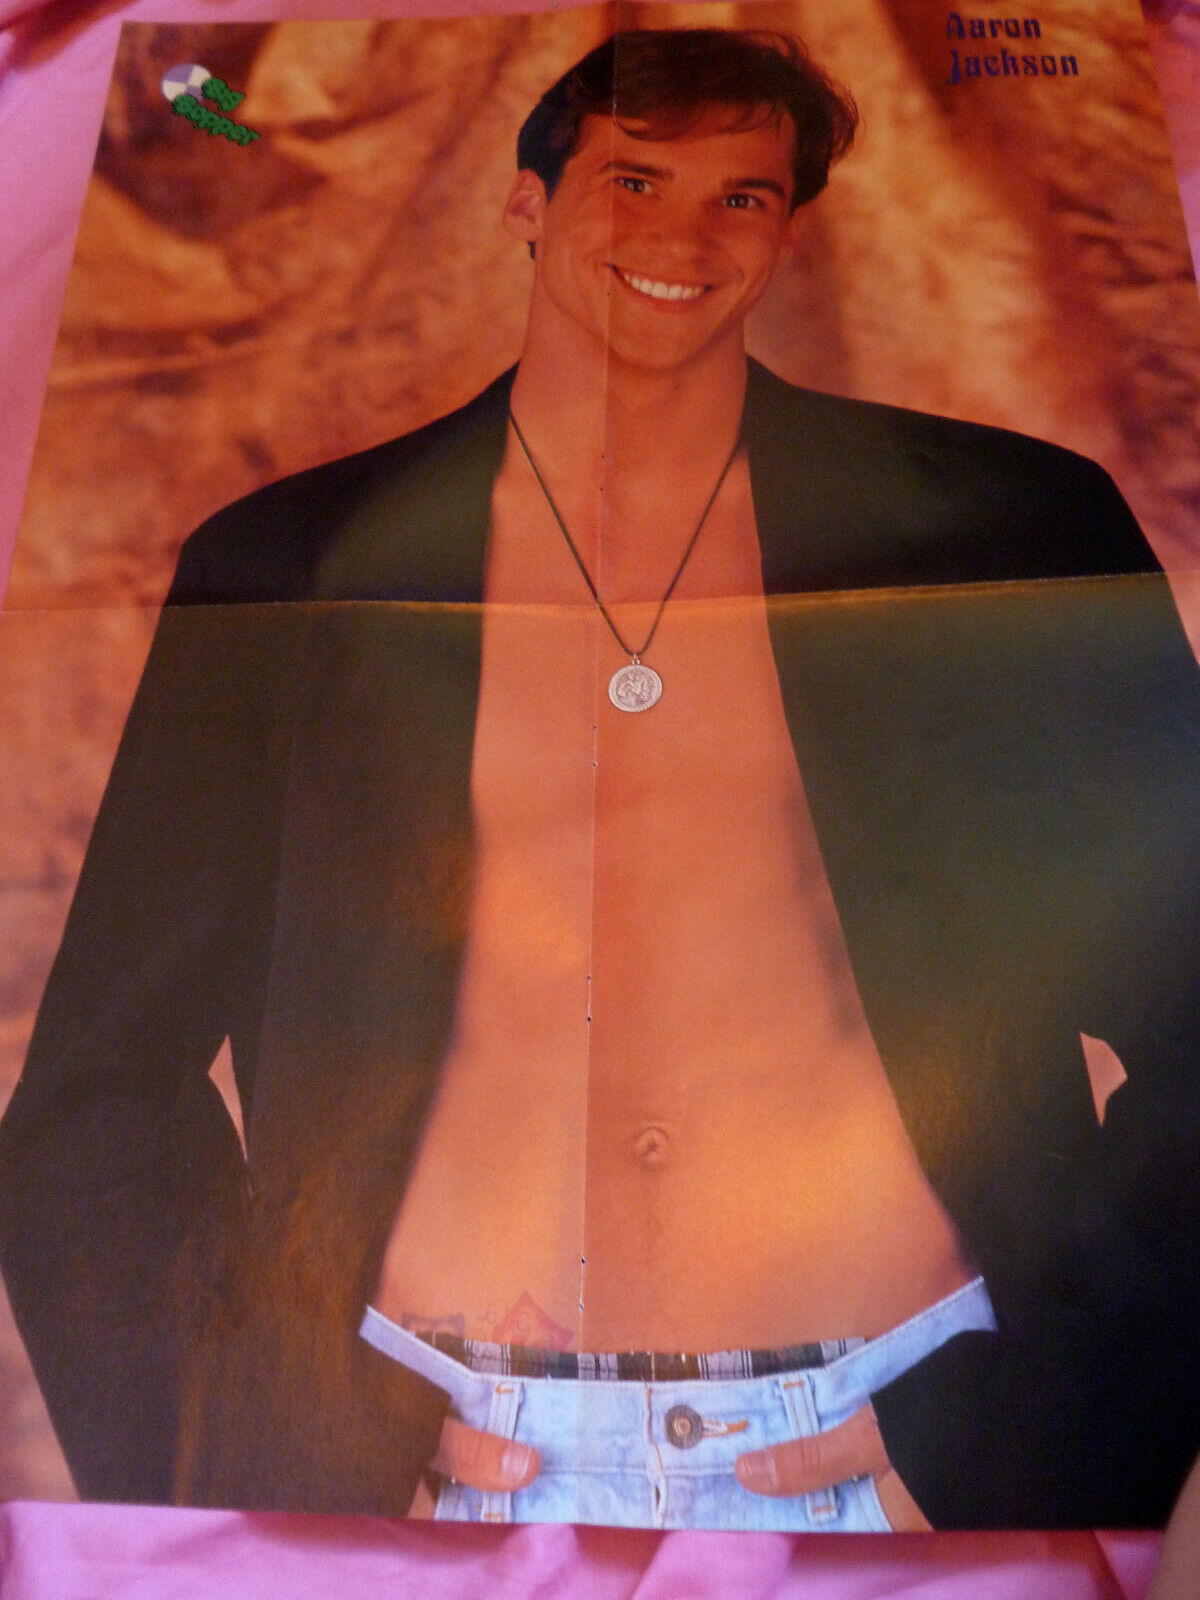 Aaron Jackson Shirtless Barechested magazine poster pin up Matthew Lawrence